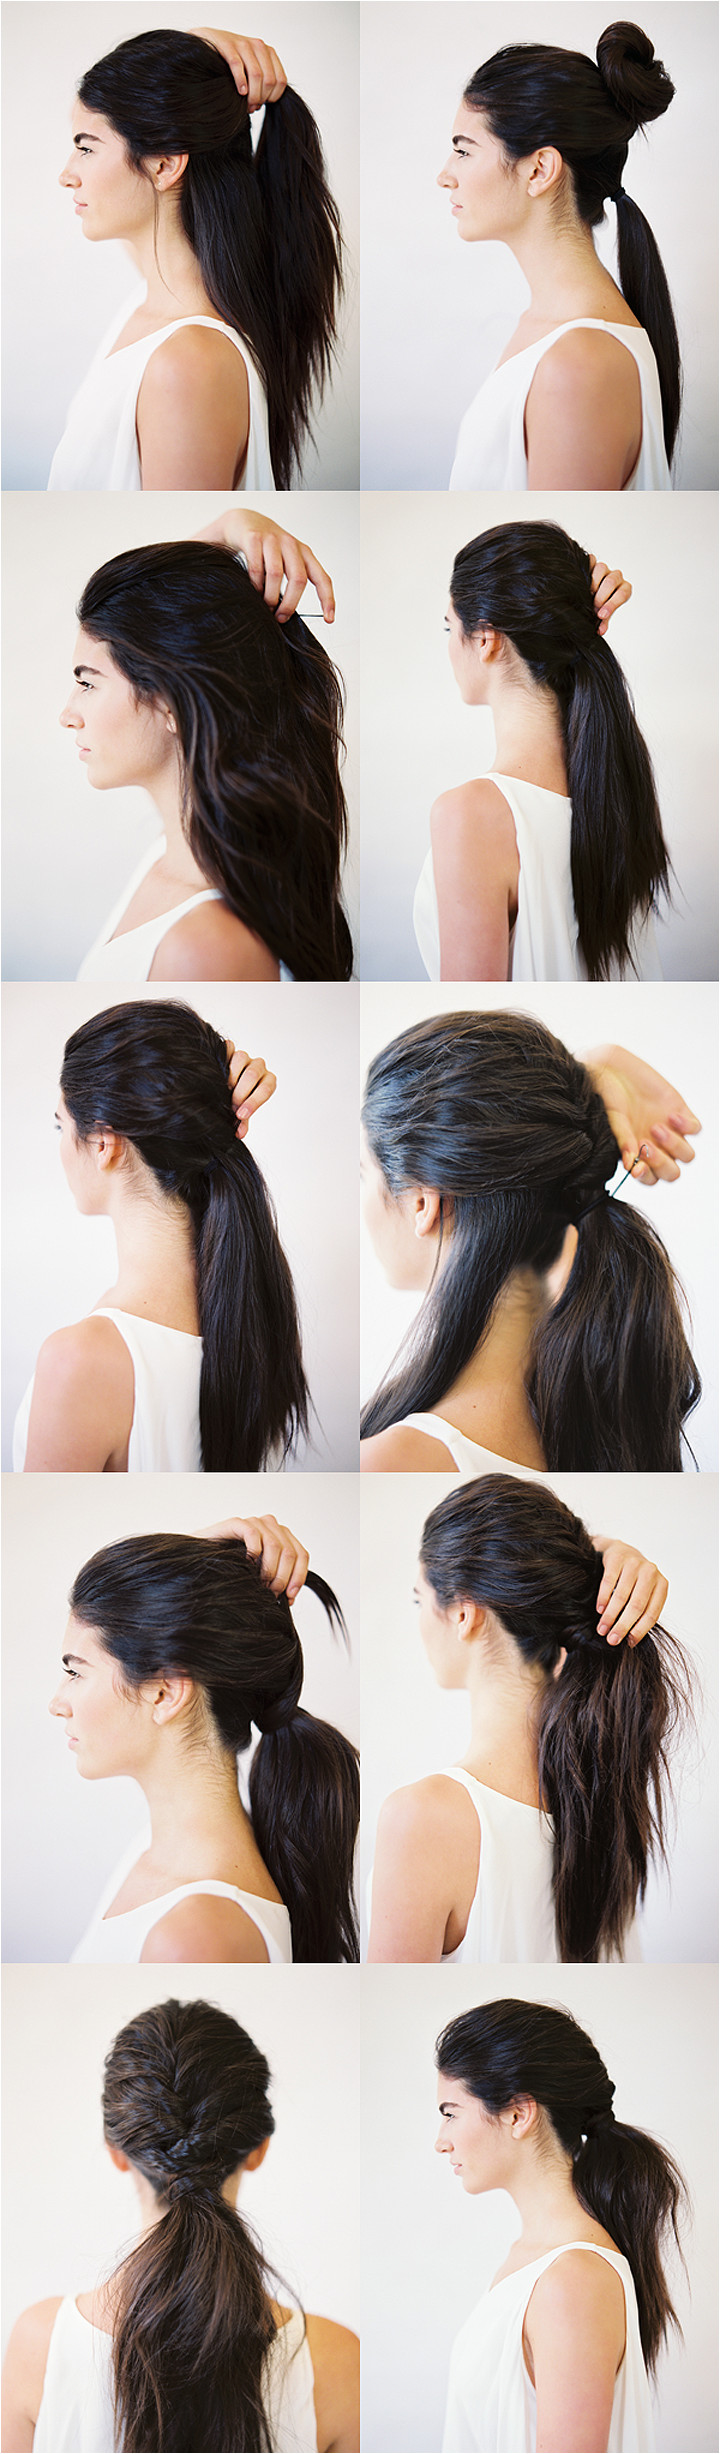 DIY tousled layered ponytail